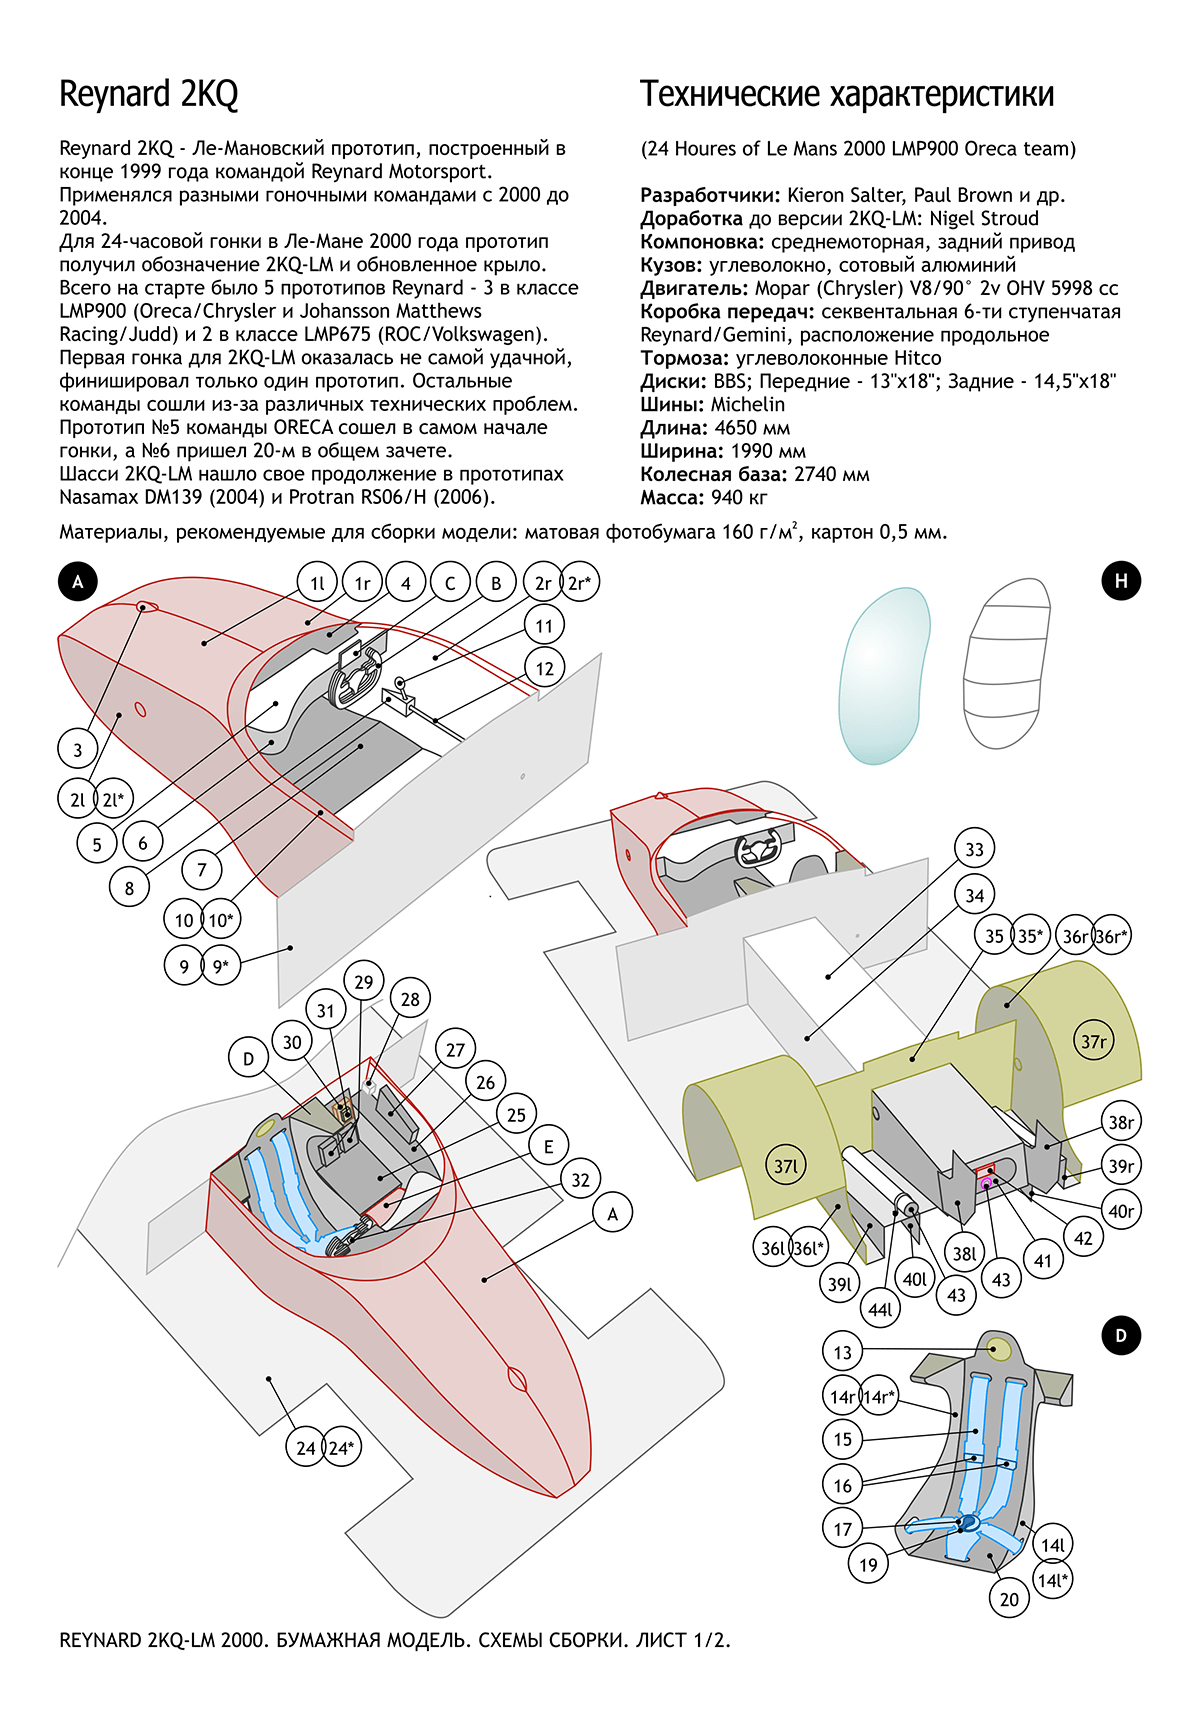 Reynard 2kq paper model kit schematic